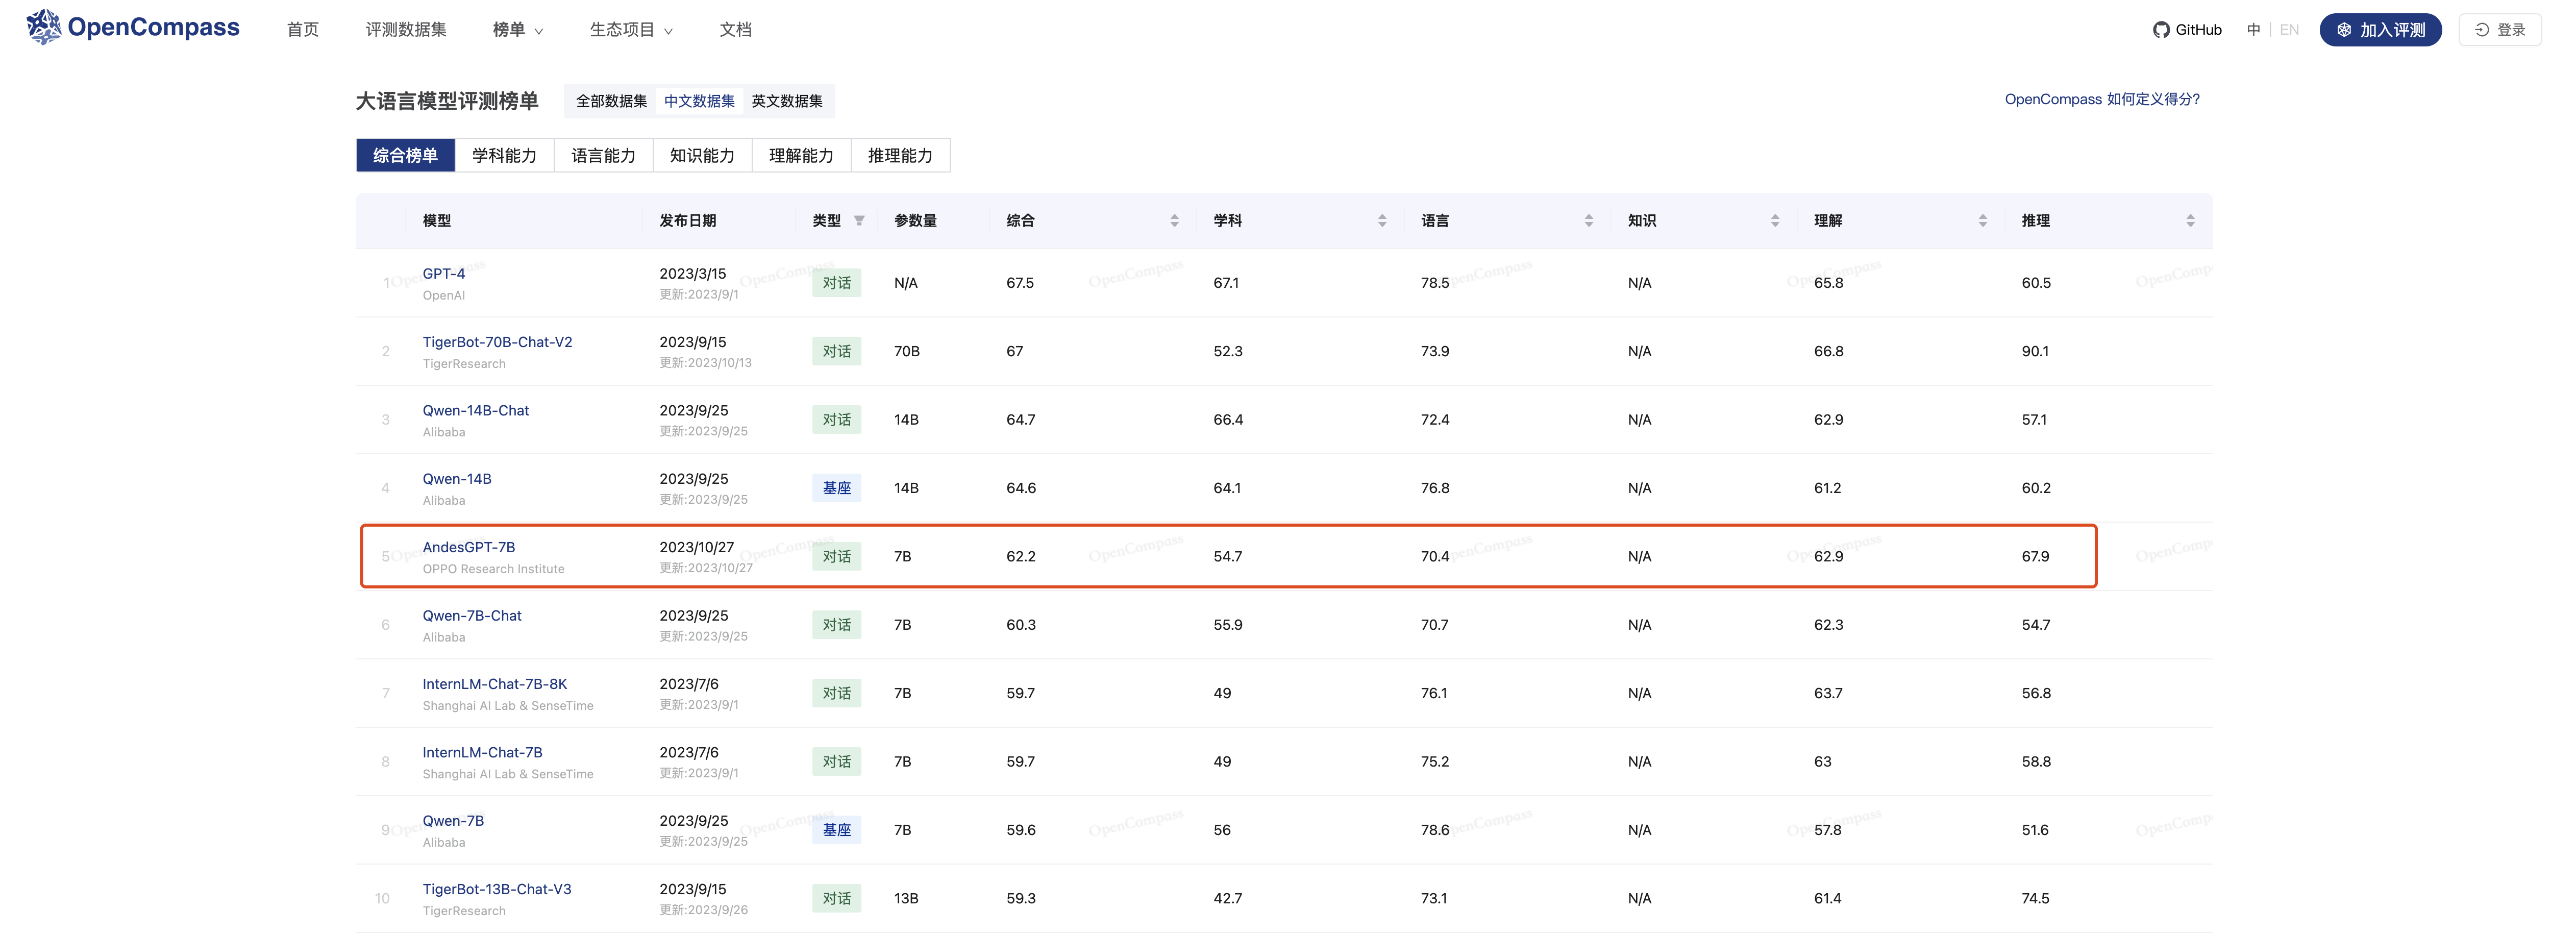 (OpenCompass大说话模子评测榜单-汉文数据集 2023/10/30)